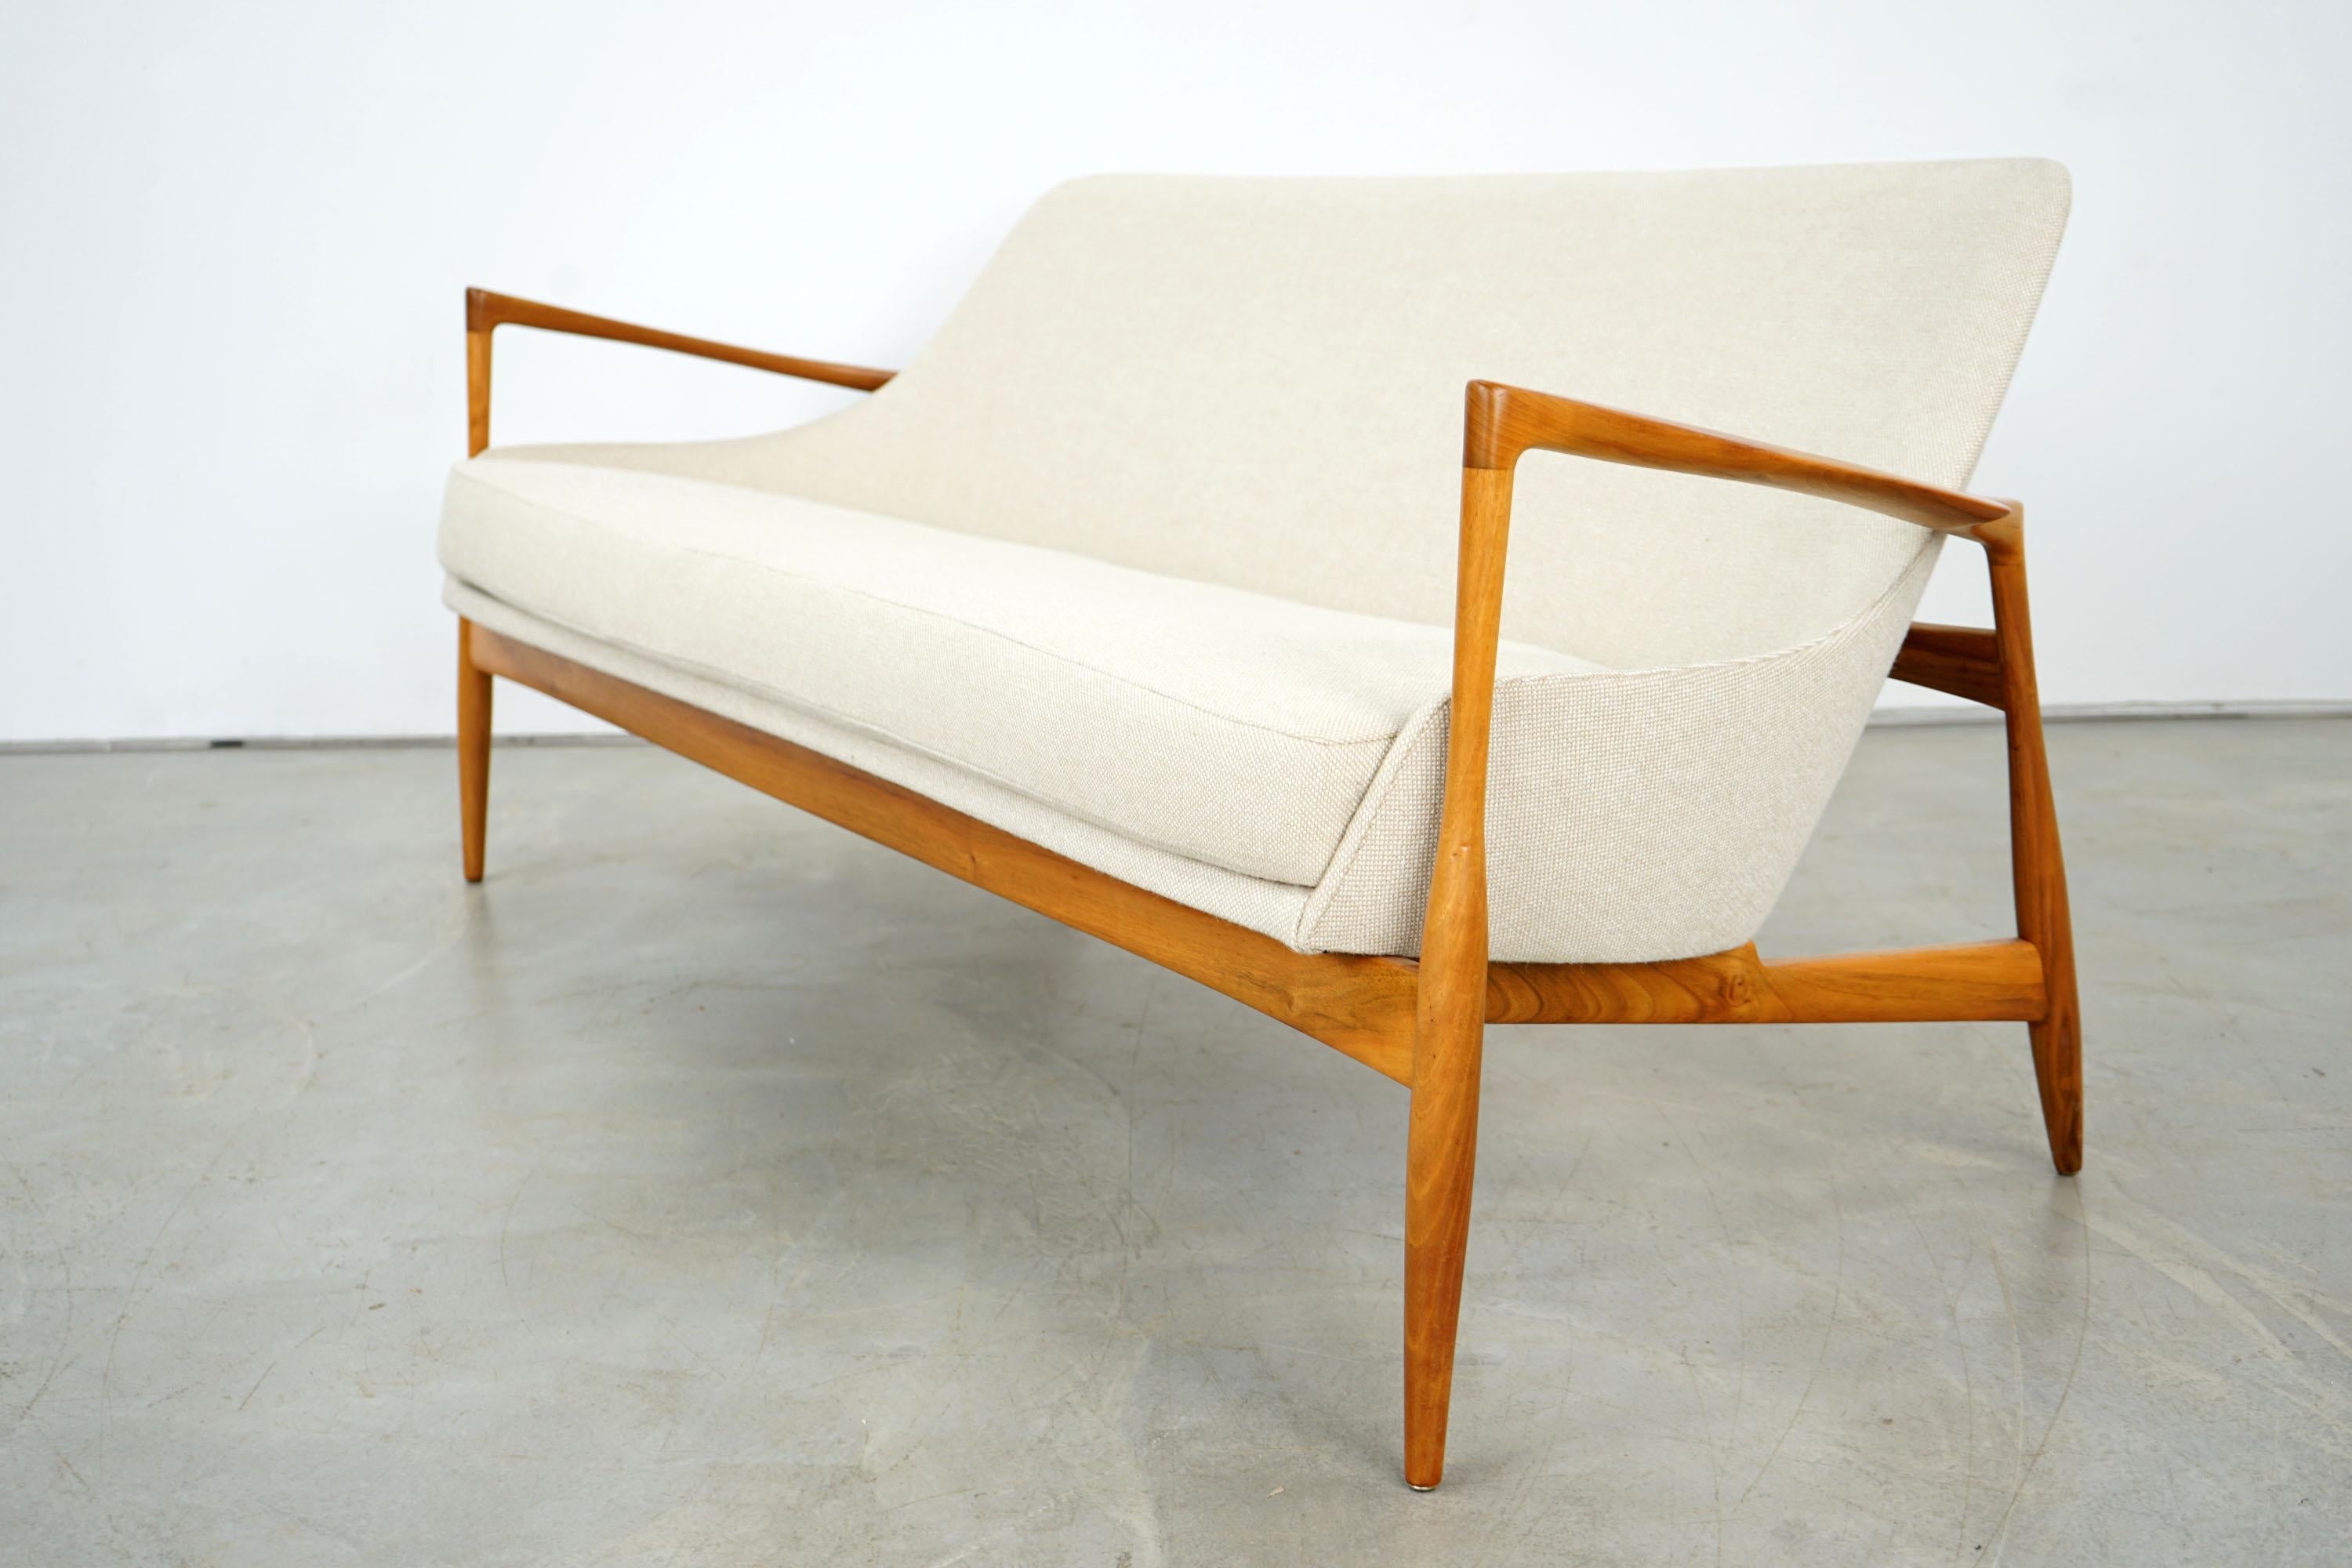 Ib Kofod-Larsen designed his version of the Seating Group called 